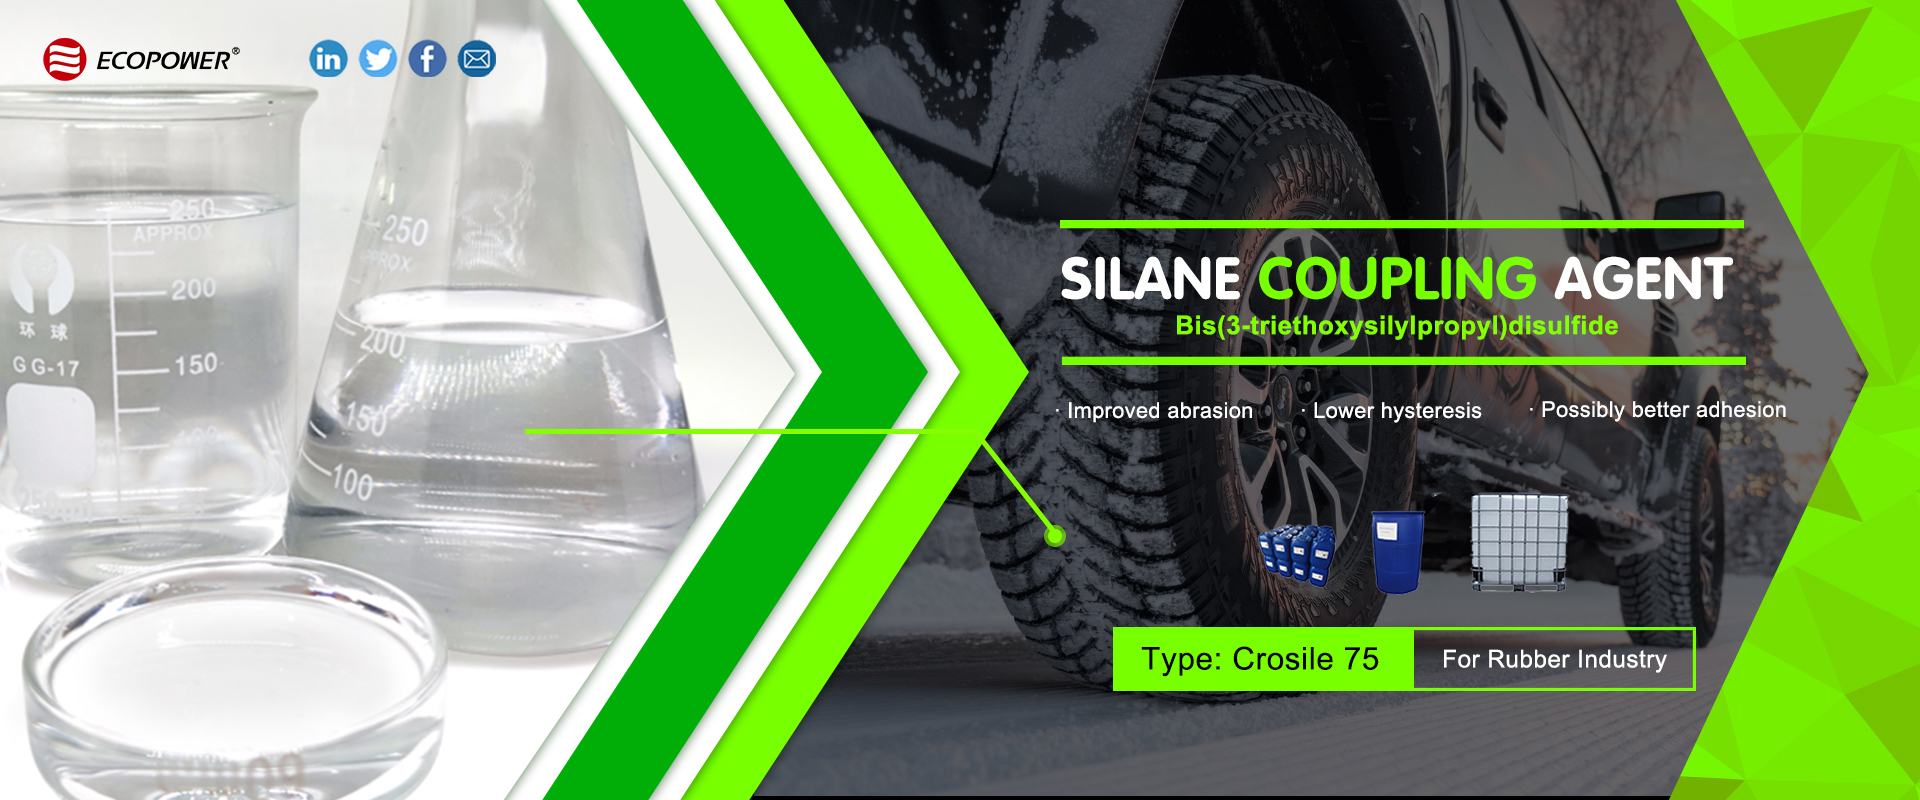 Silane coupling agent crosile 75